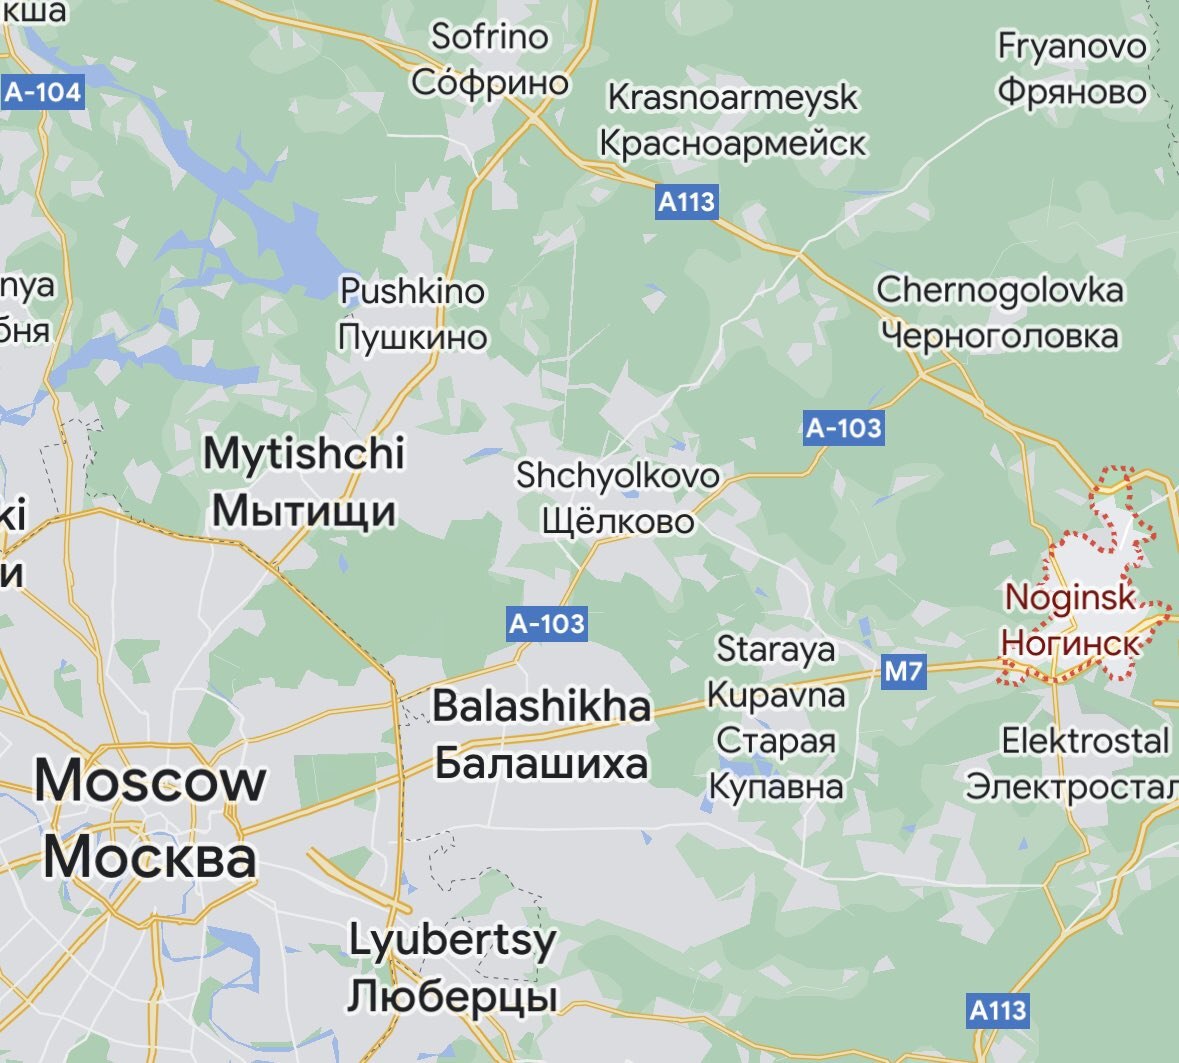 پهپاد انتحاری اوکراینی در ۴۰ کیلومتری مسکو سقوط کرد